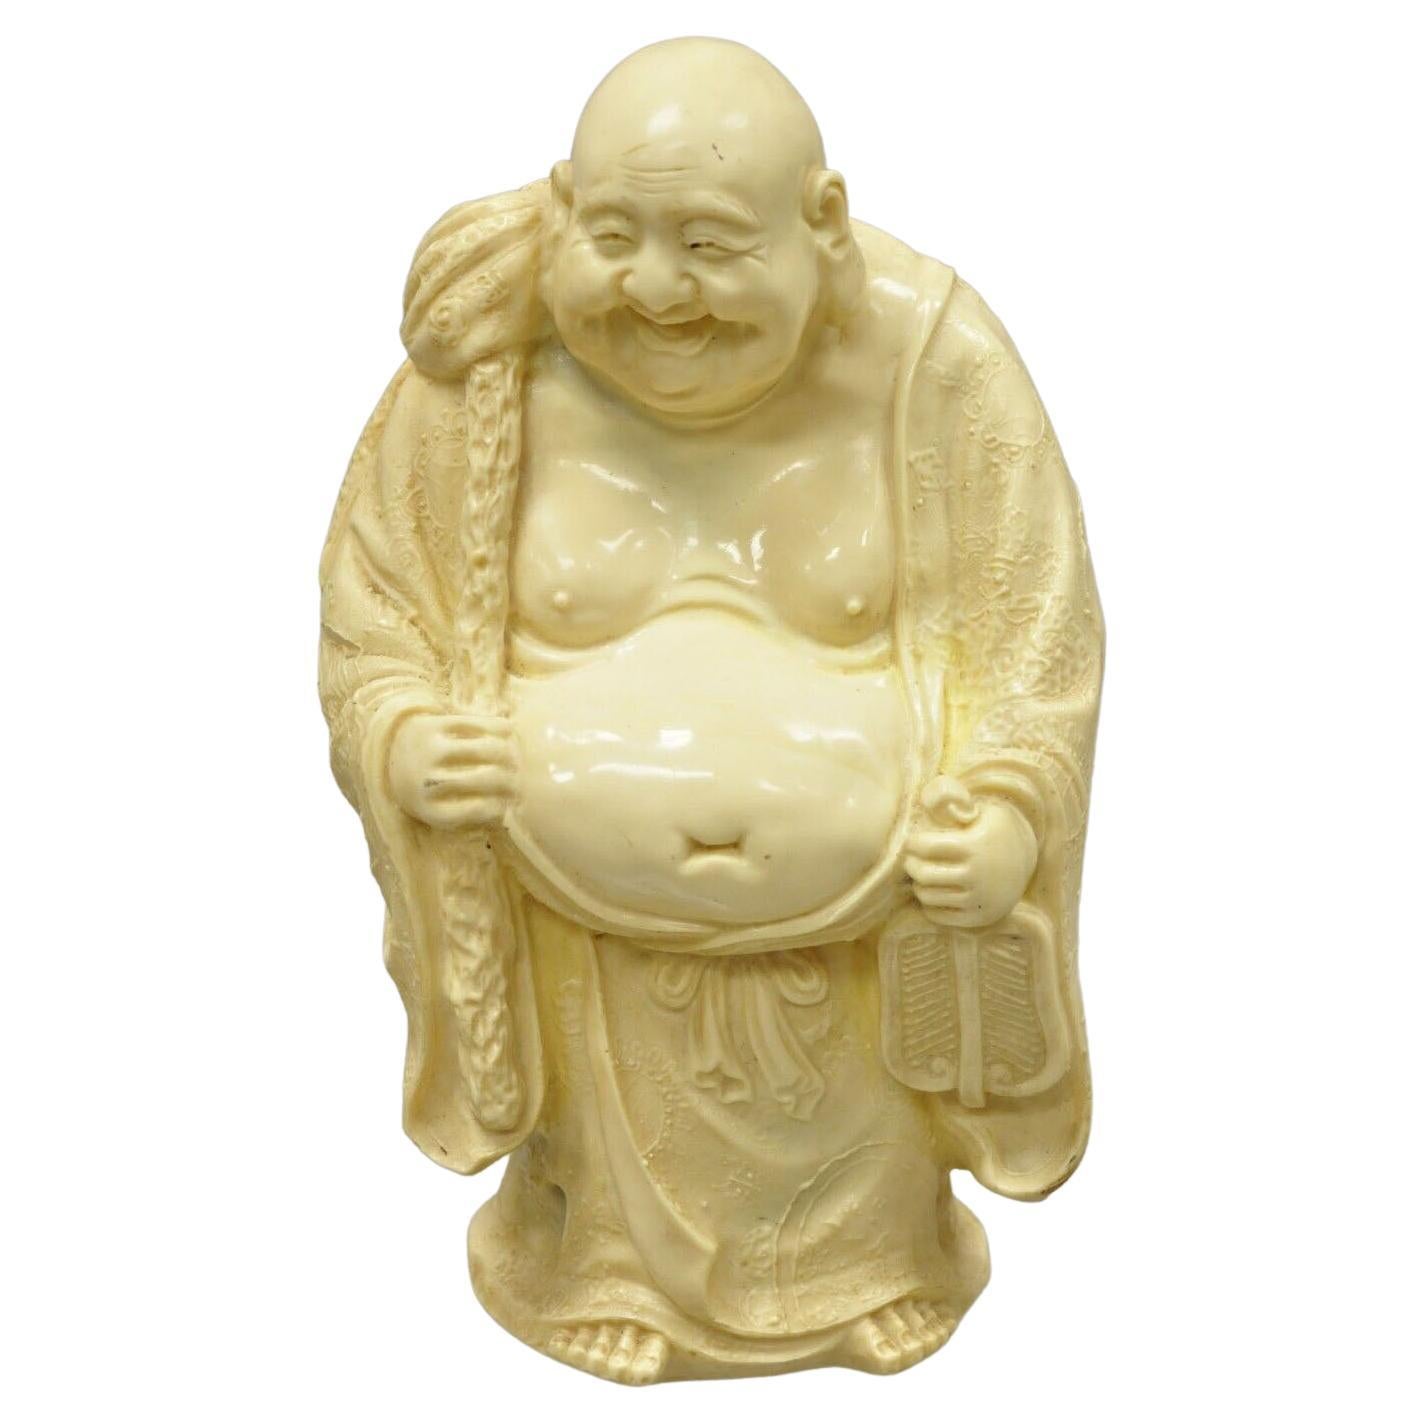 Vintage Resin Laughing Buddah Statue Sculpture Figure For Sale